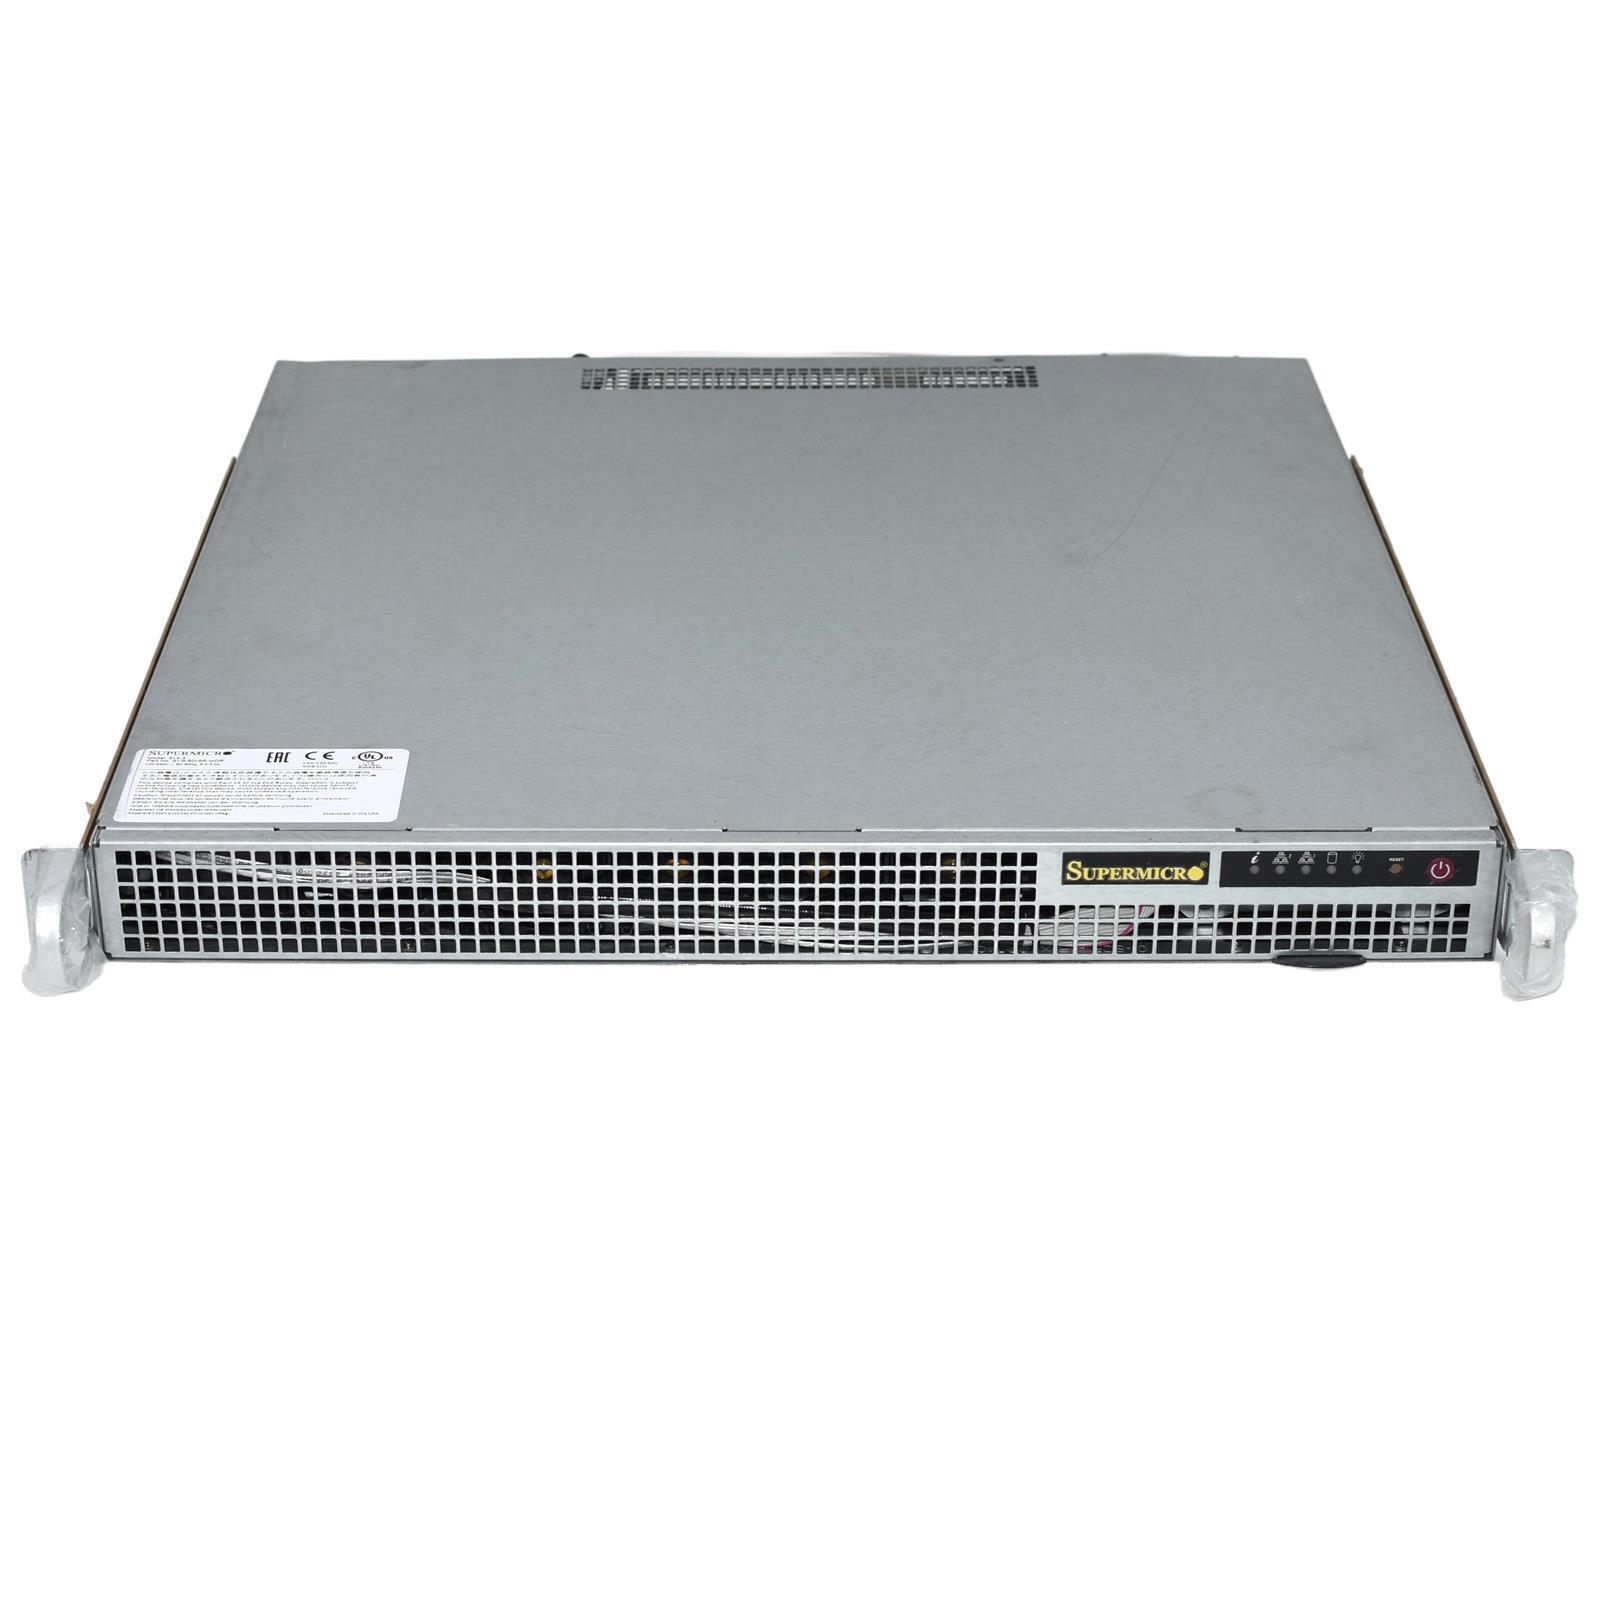 Supermicro SYS-6018R-MDR X10DRD-L 2x E5-2630v4 2.2Ghz 64GB 1U Rackmount Server